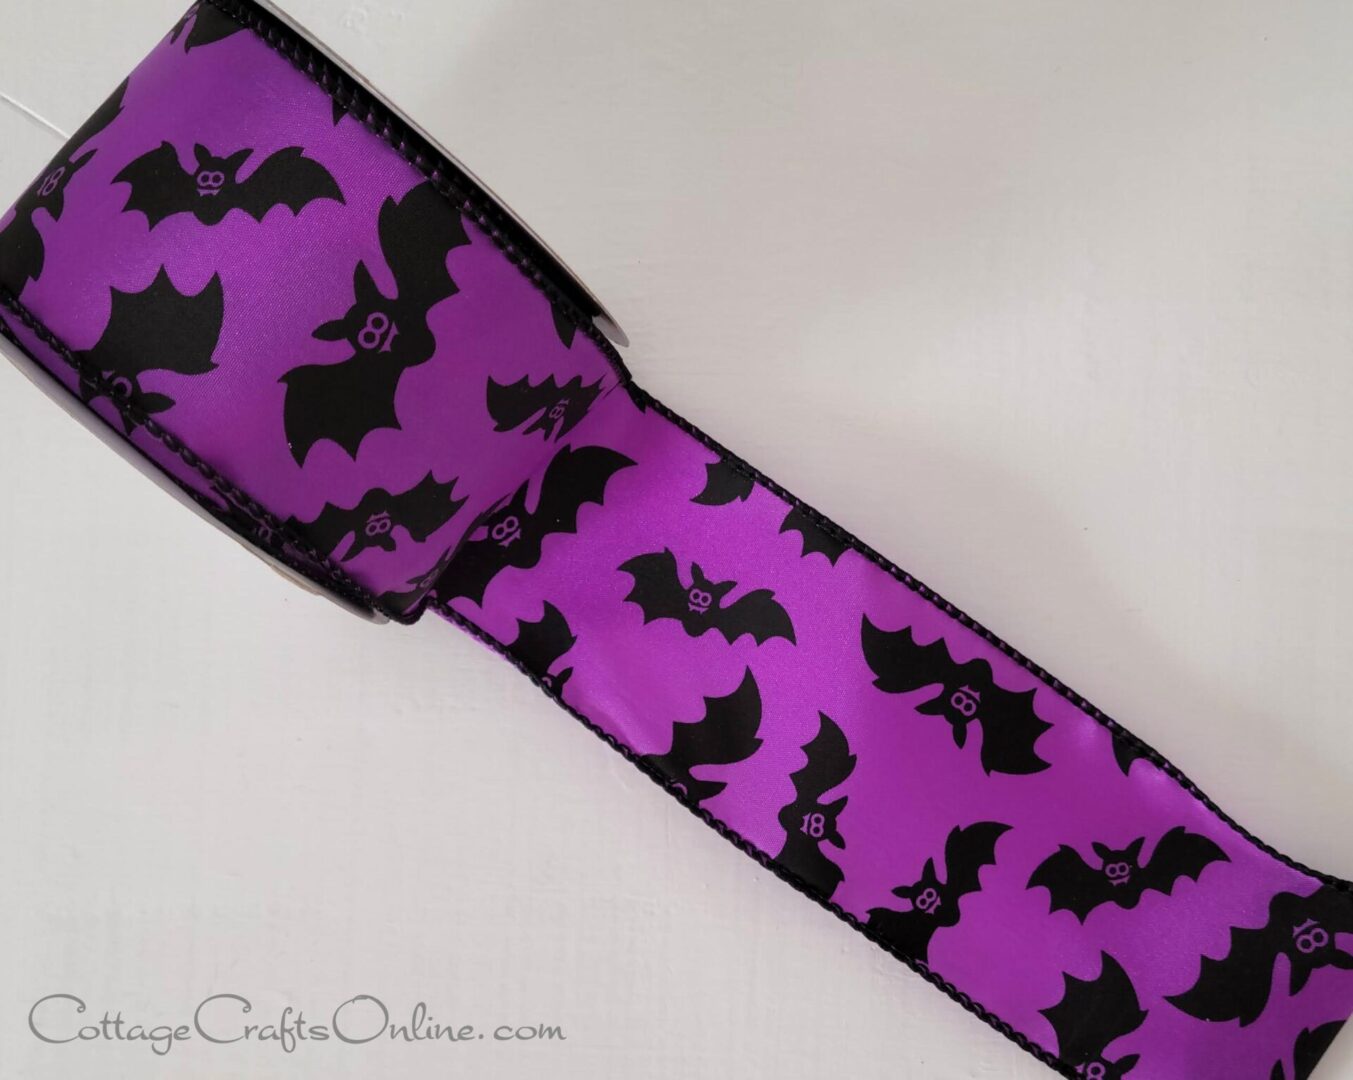 A purple ribbon with bats on it